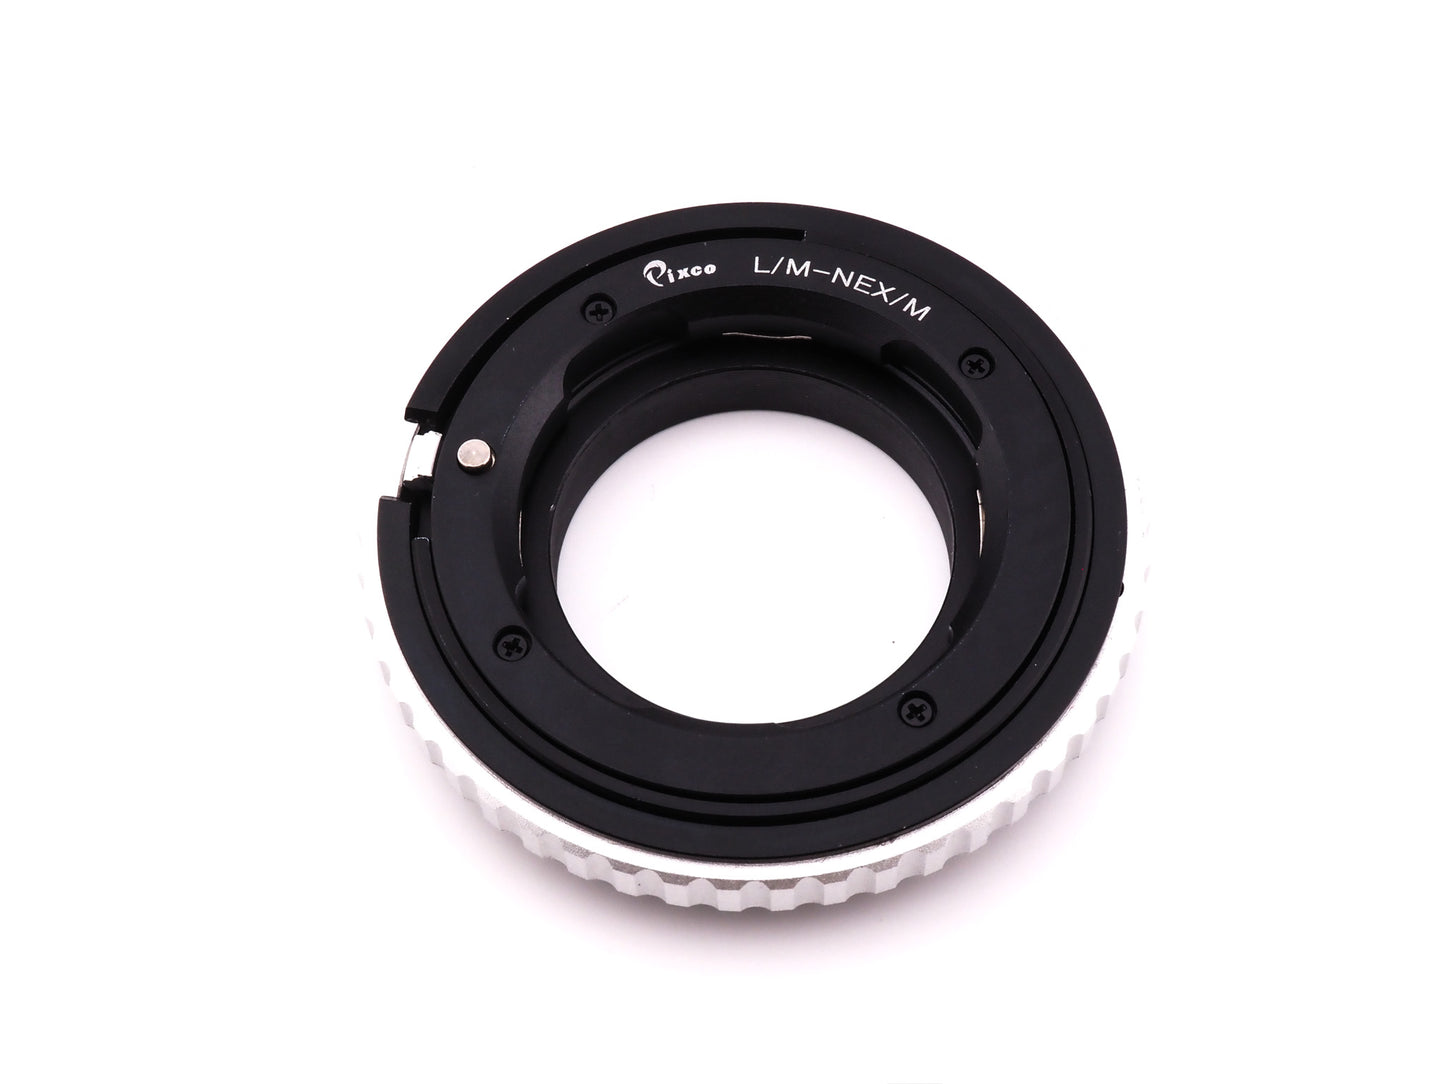 Pixco Leica M - Sony E Adapter (L/M-NEX/M) - Lens Adapter